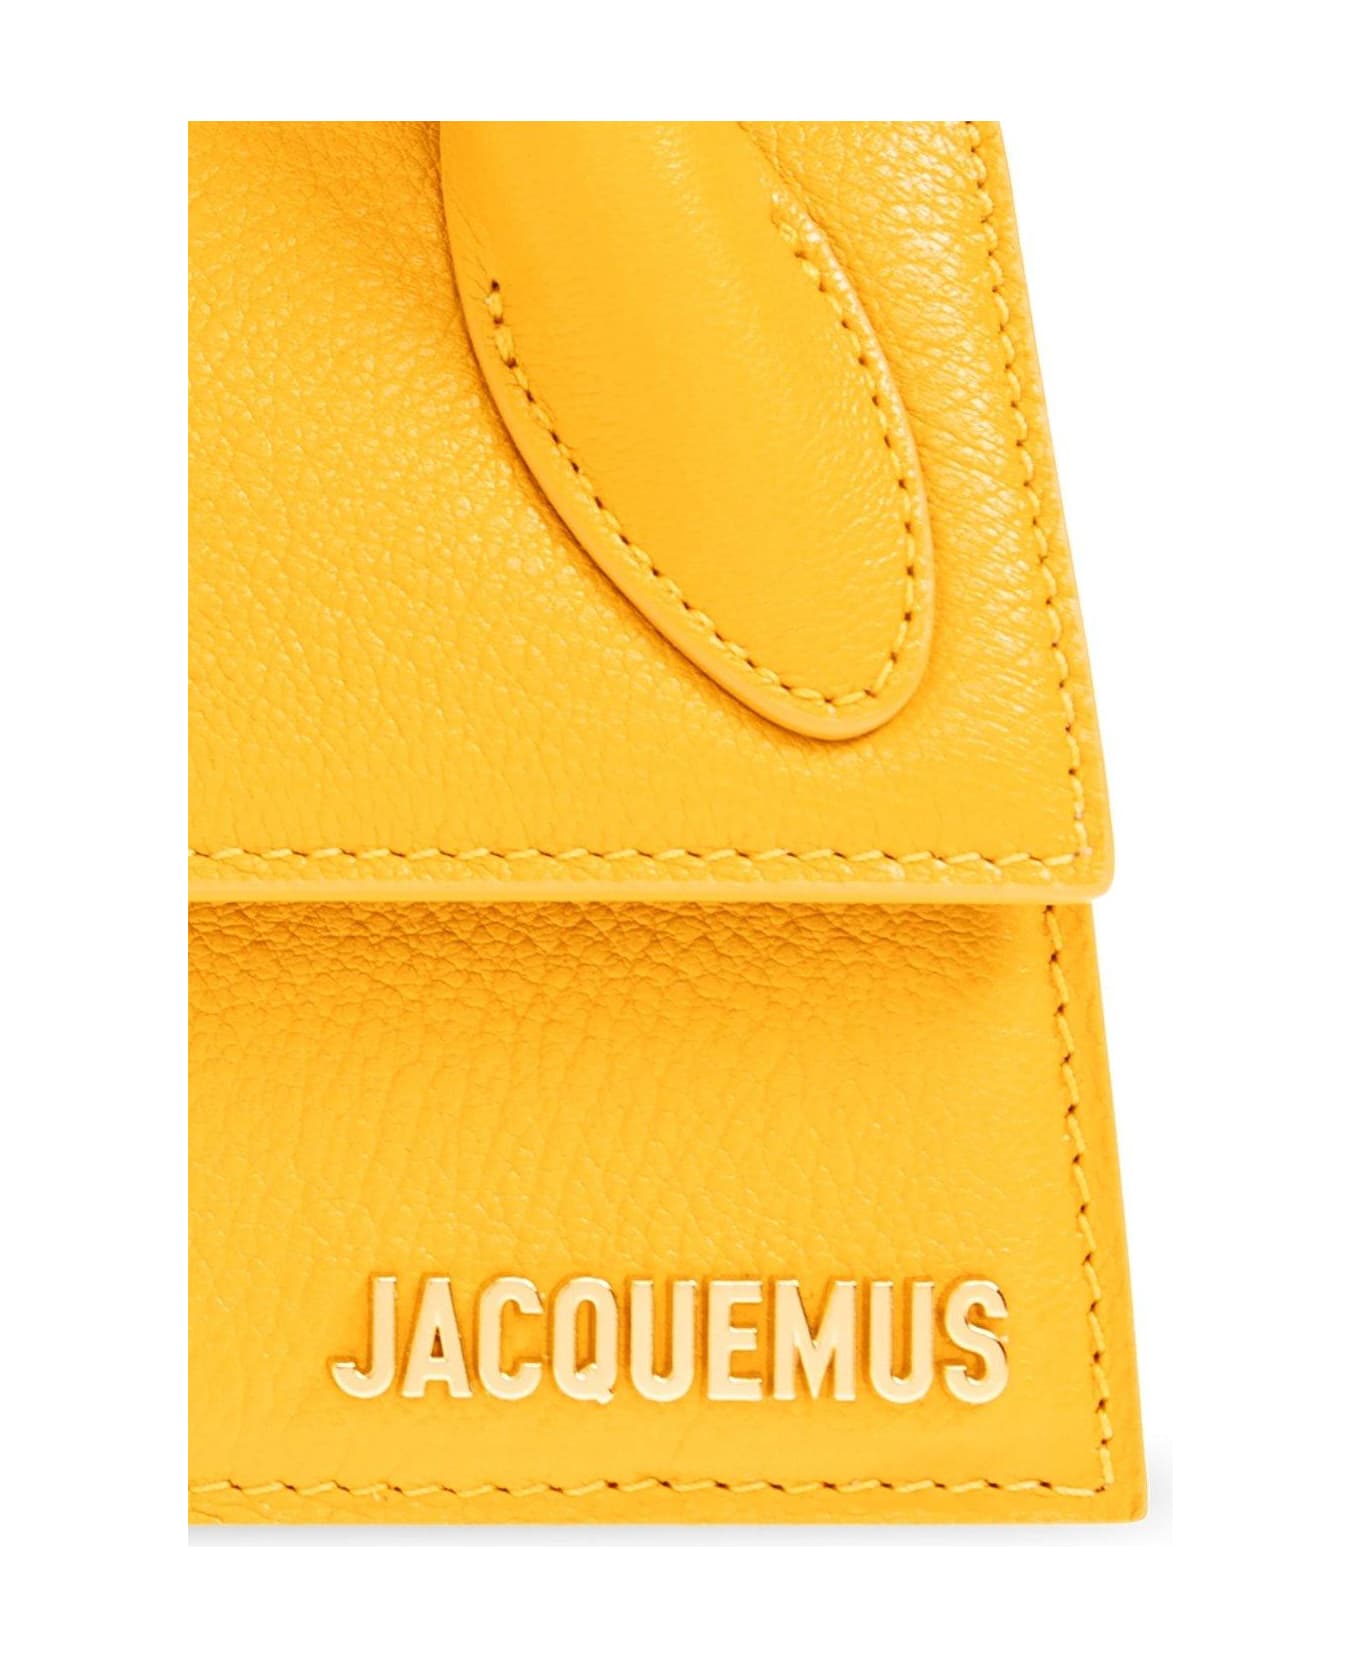 Jacquemus Le Chiquito Long Top Handle Bag - Dark orange